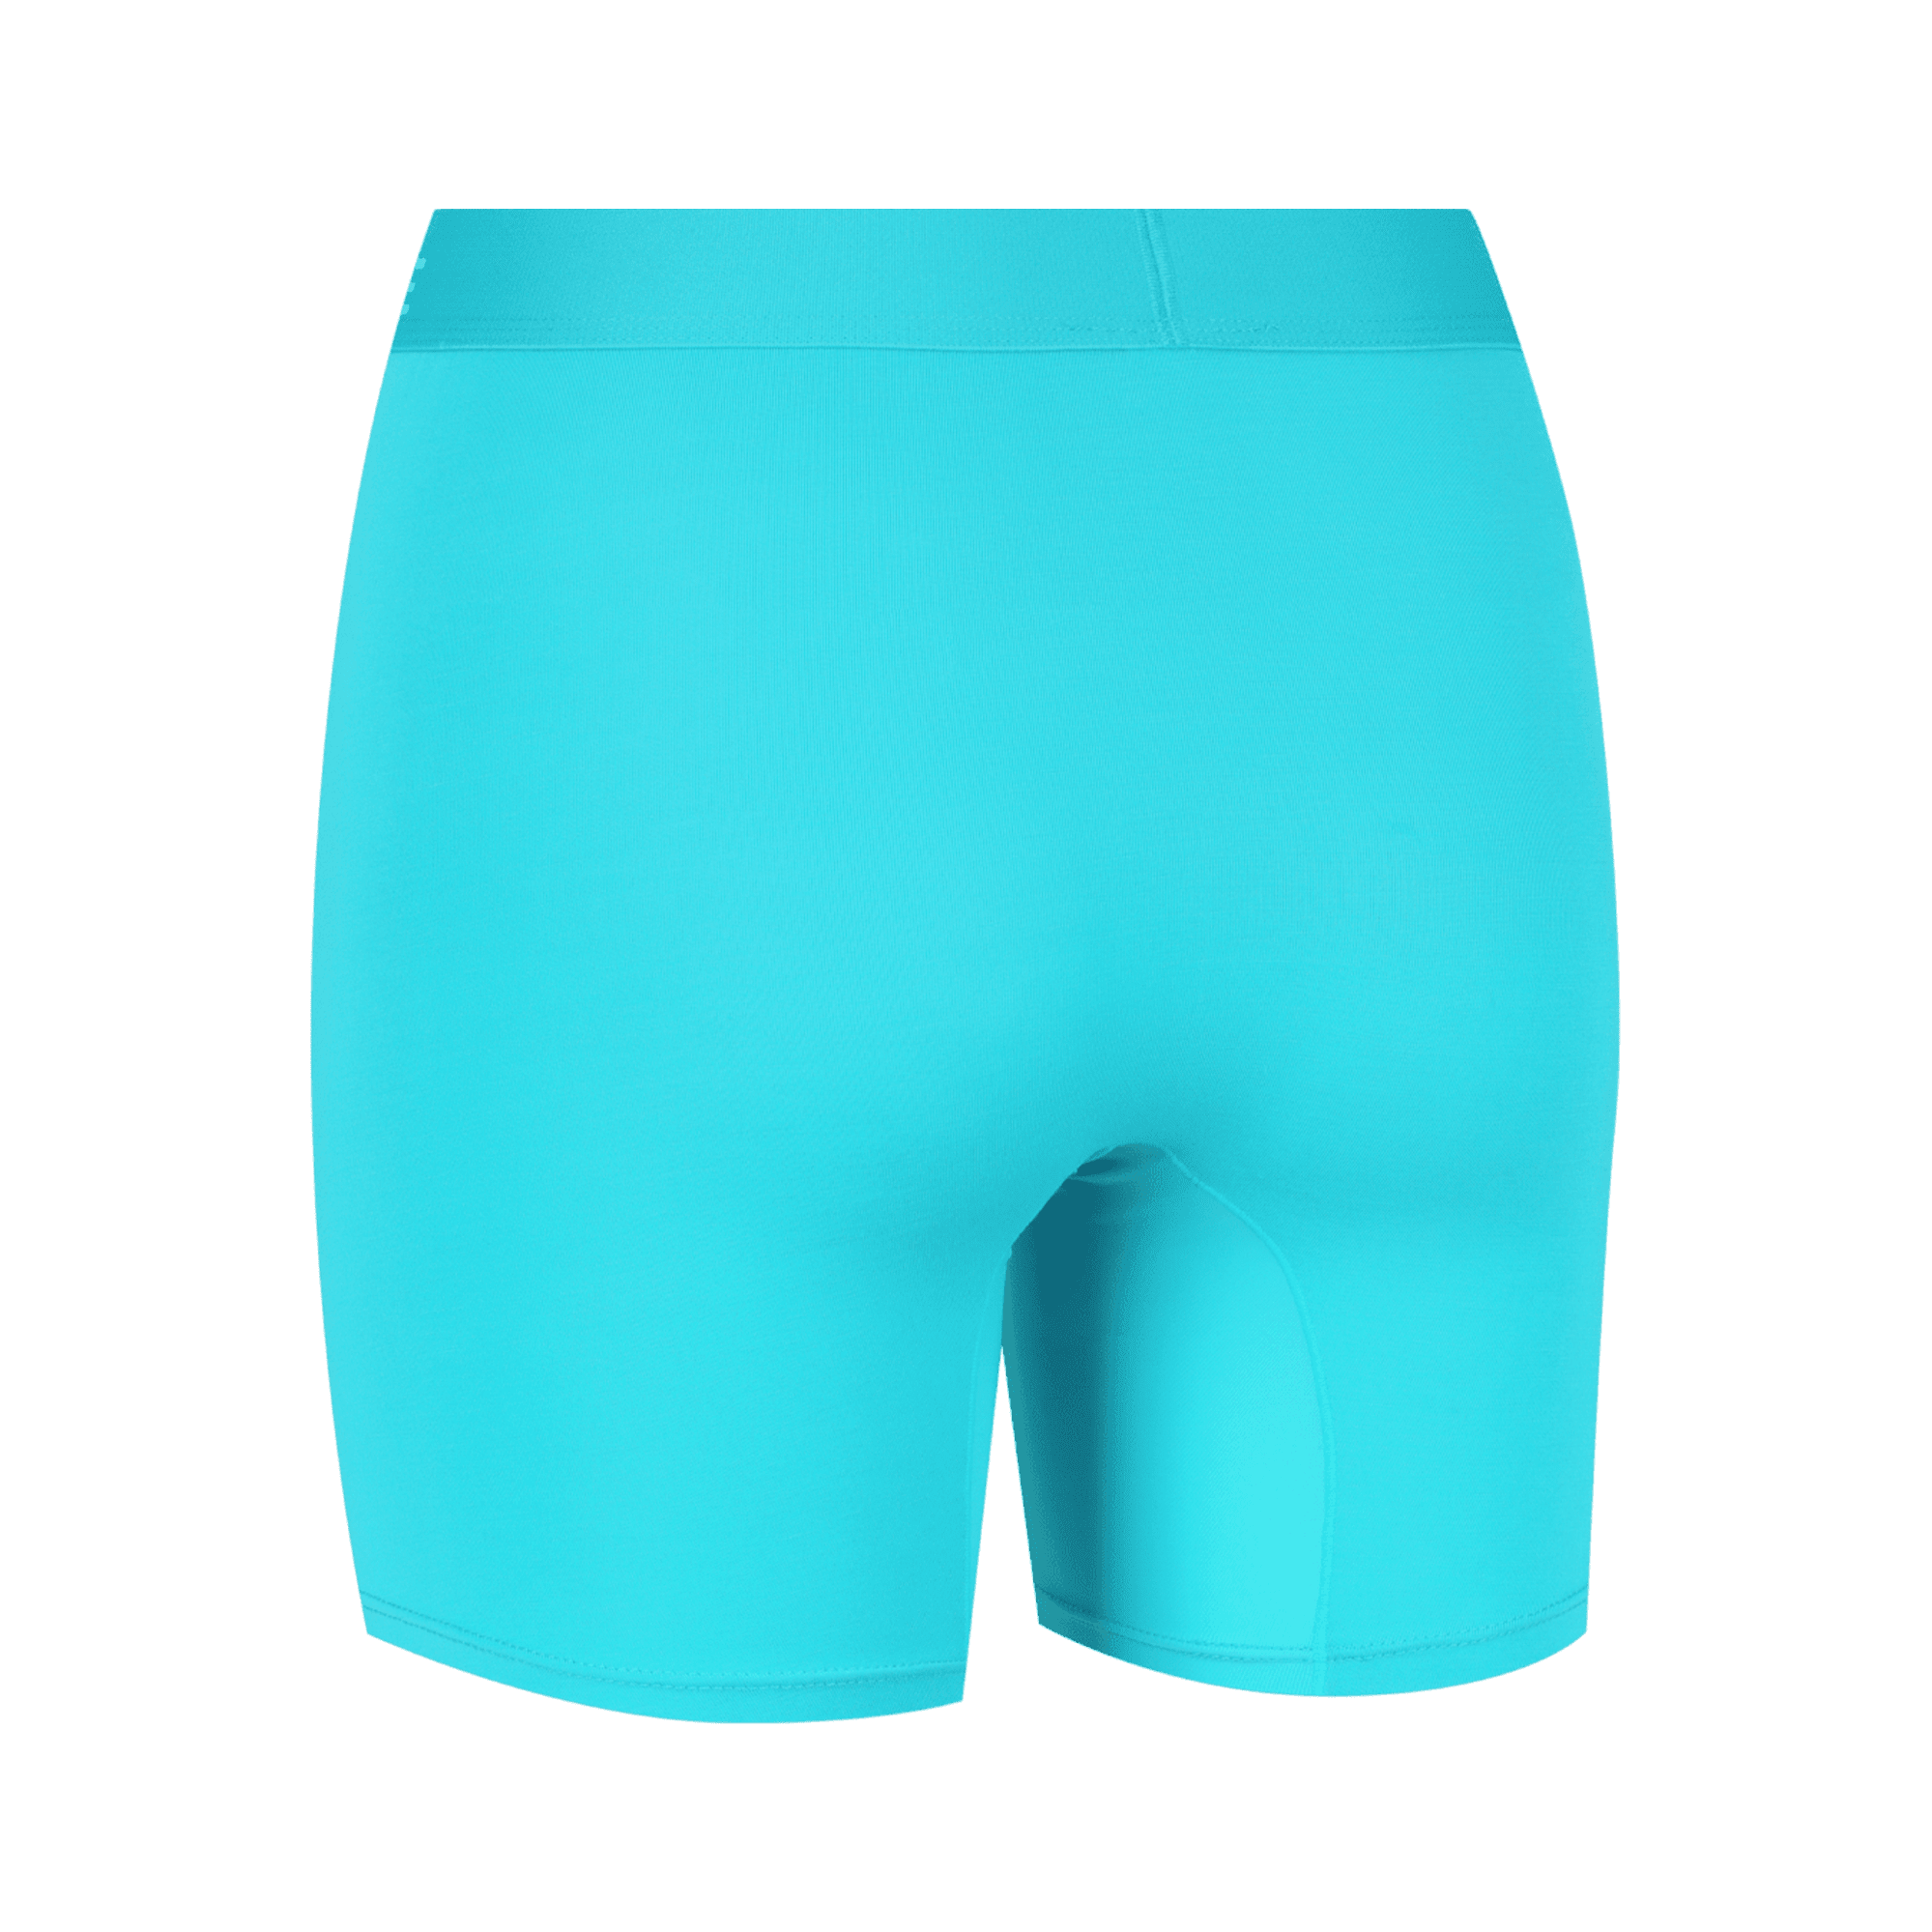 Women's Body Shorts - Blue